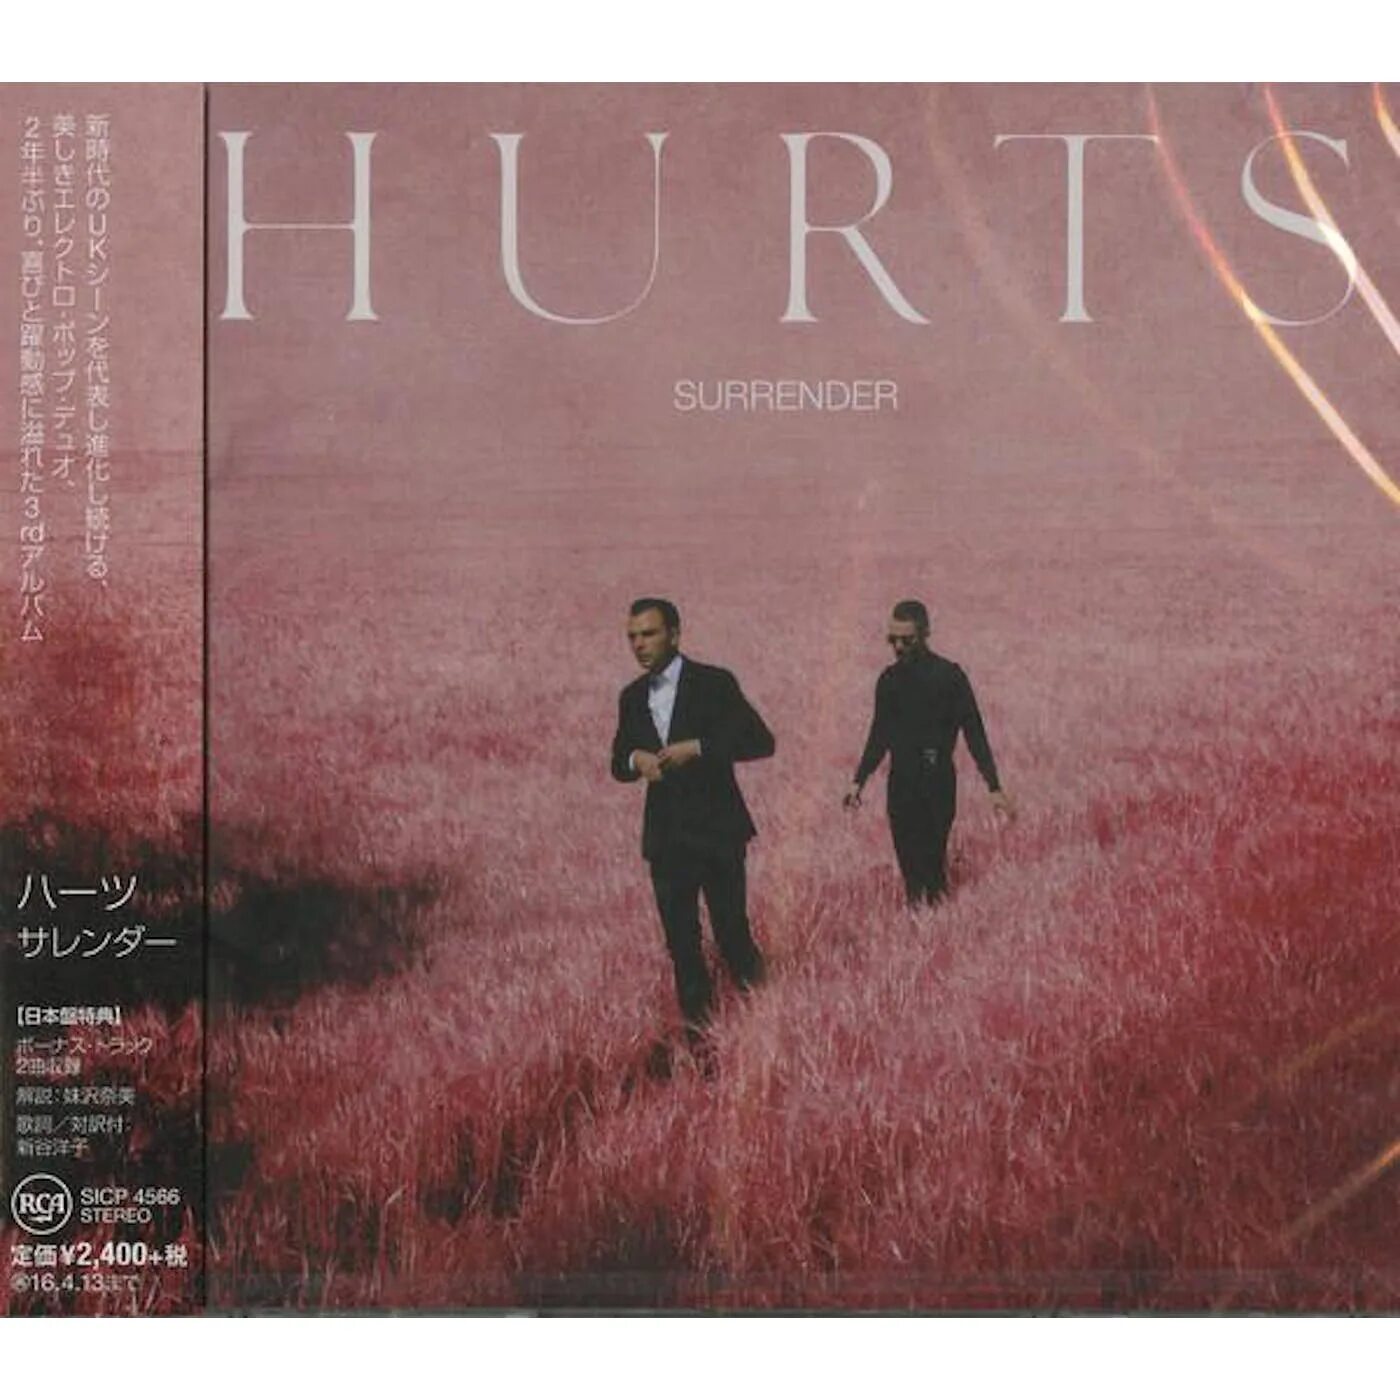 Hurts slow. Hurts - Surrender ( 2015 ). Hurts Surrender альбом. Hurts обложки альбомов. Hurts Rolling Stone.